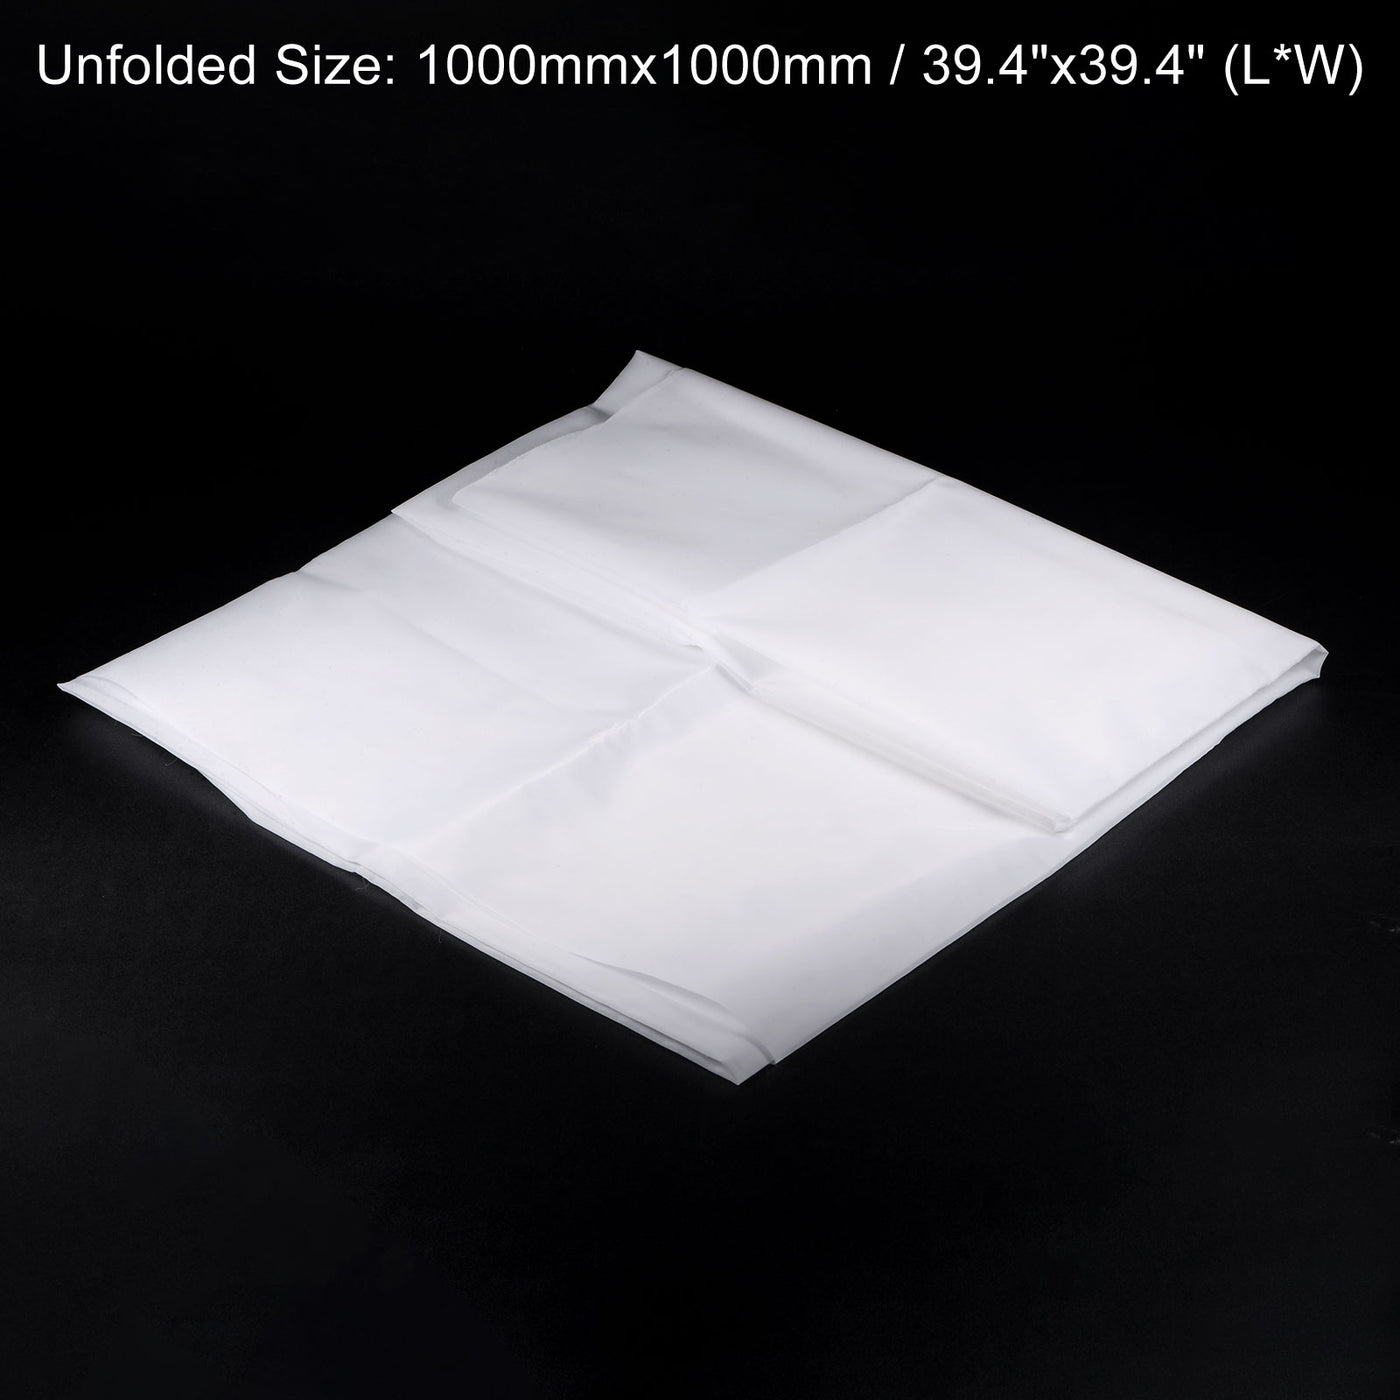 uxcell Uxcell 42 Micron Paint Nylon Mesh Filter Woven Net Sheet Filter Cloth (39"x39")